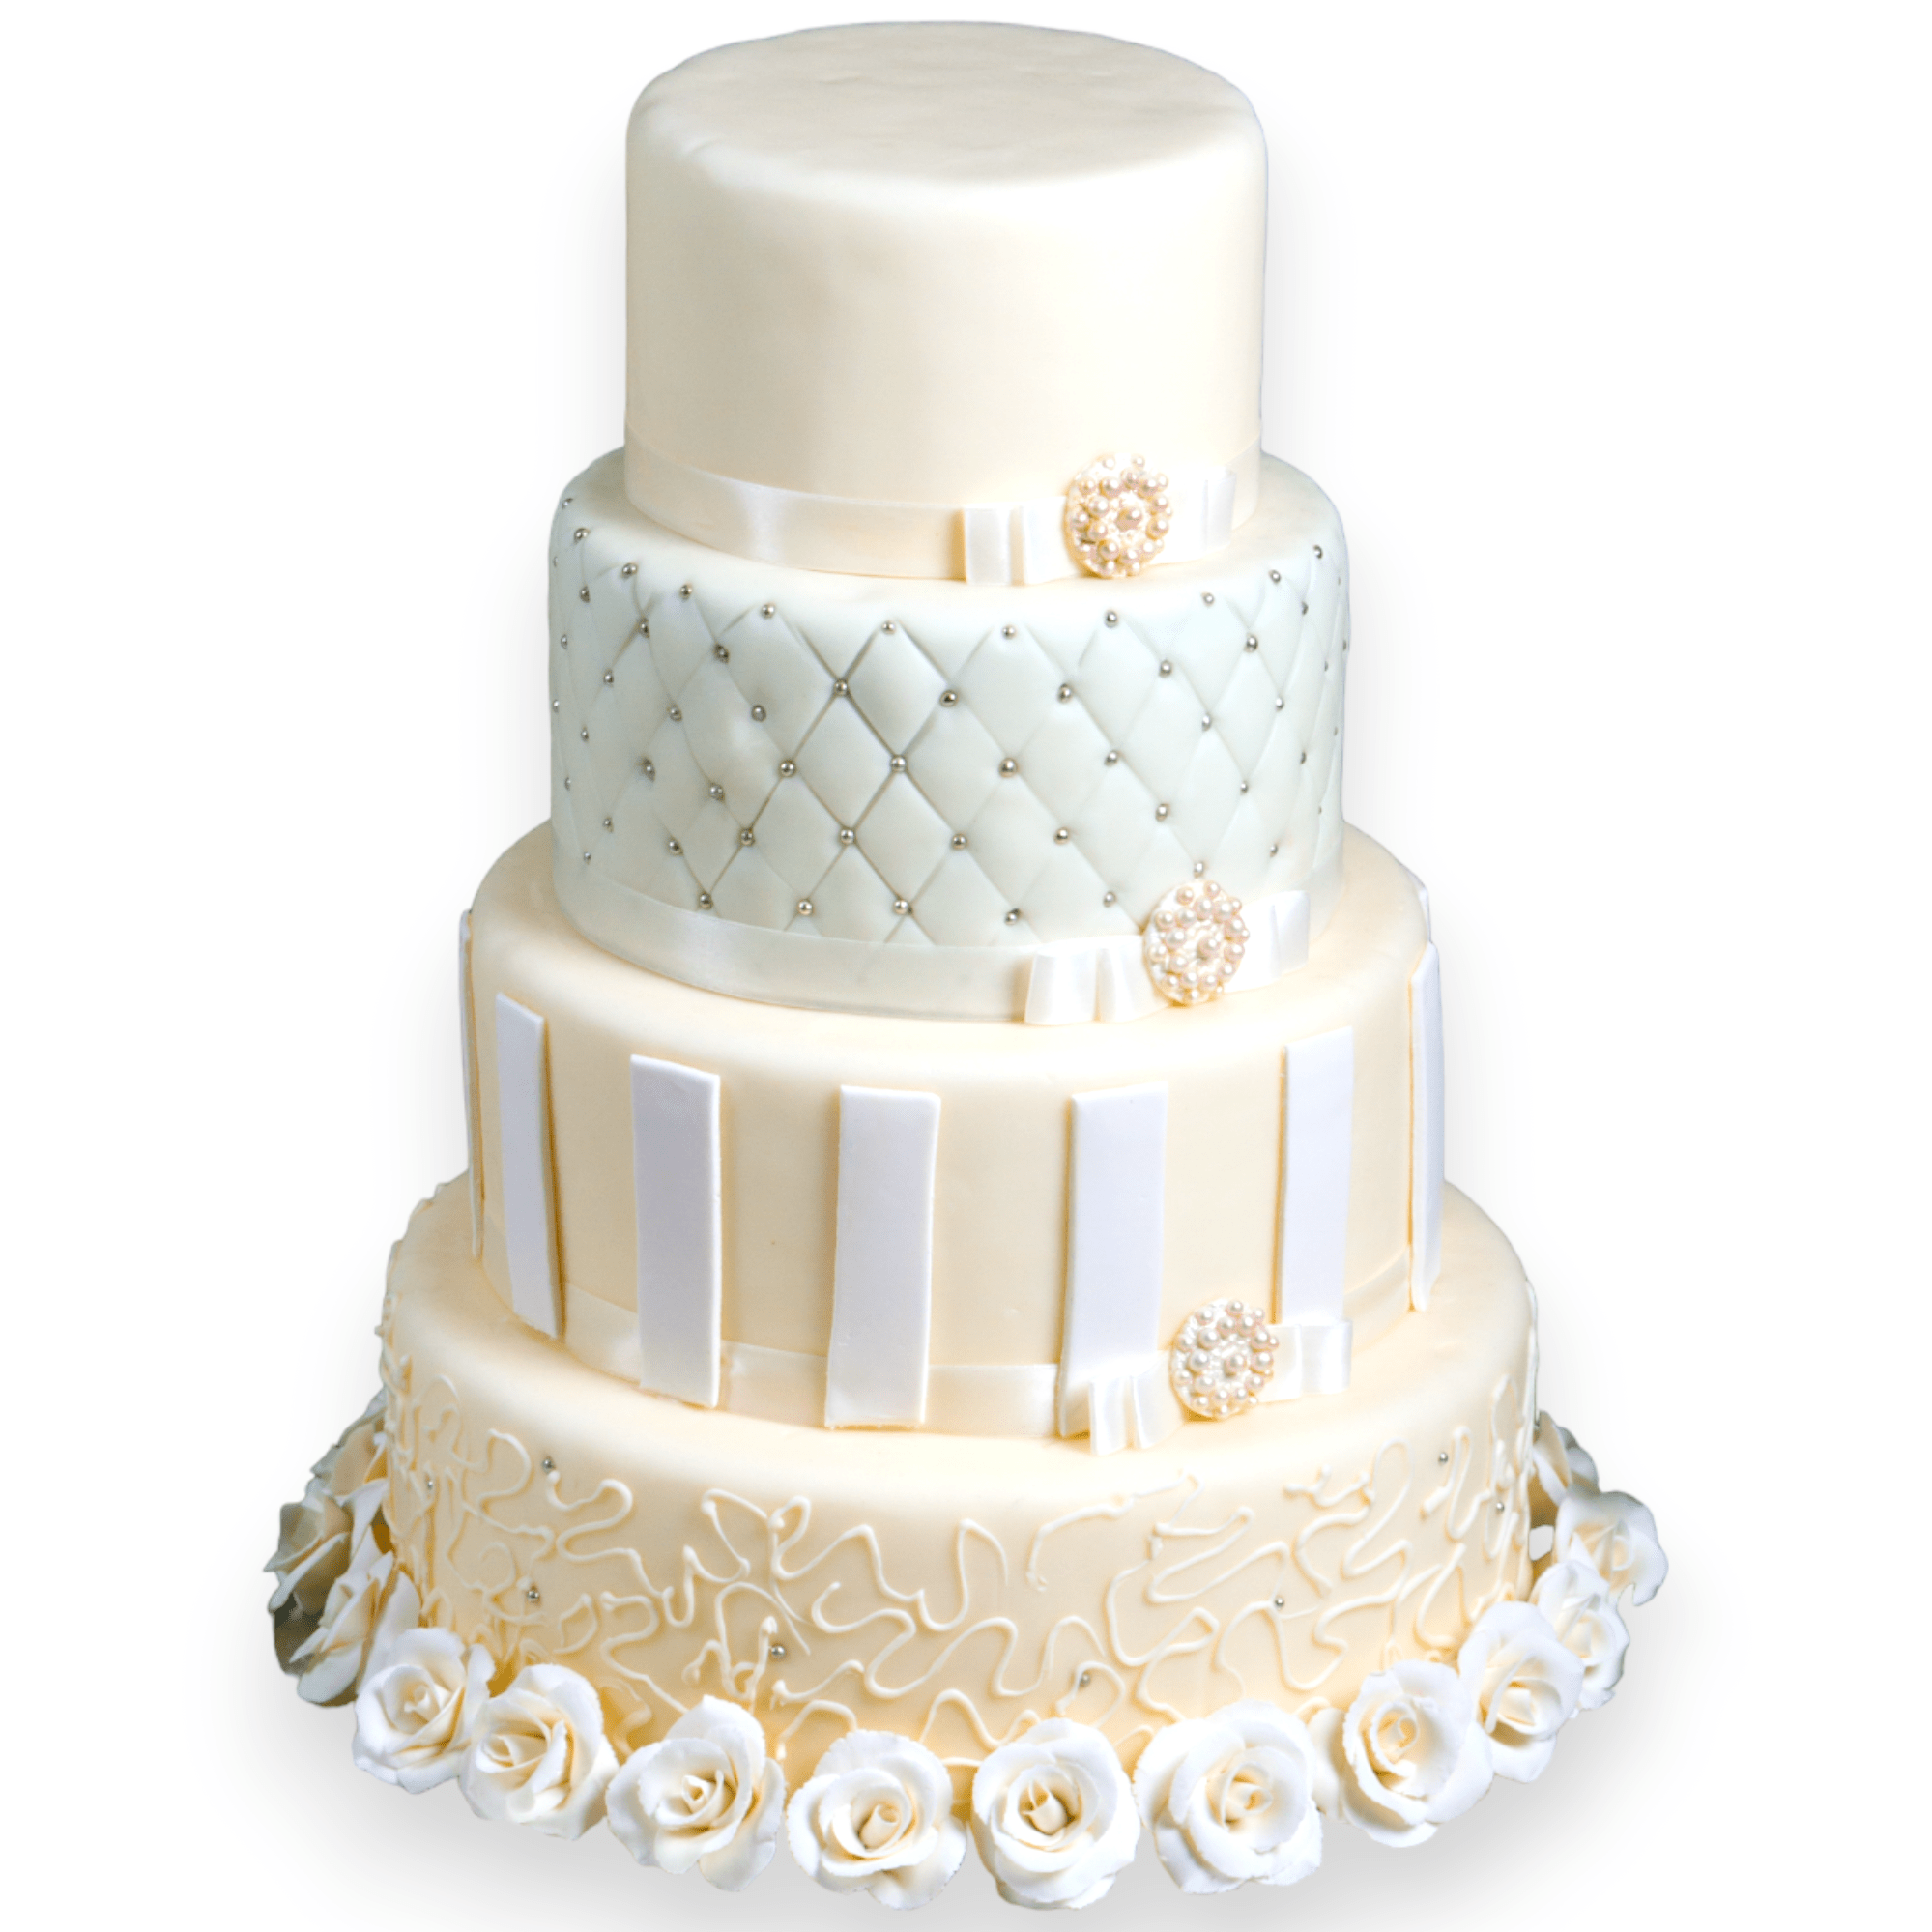 [:ro]Tort Sophisticated Elegance[:en]Sophisticated Elegance wedding cake[:]